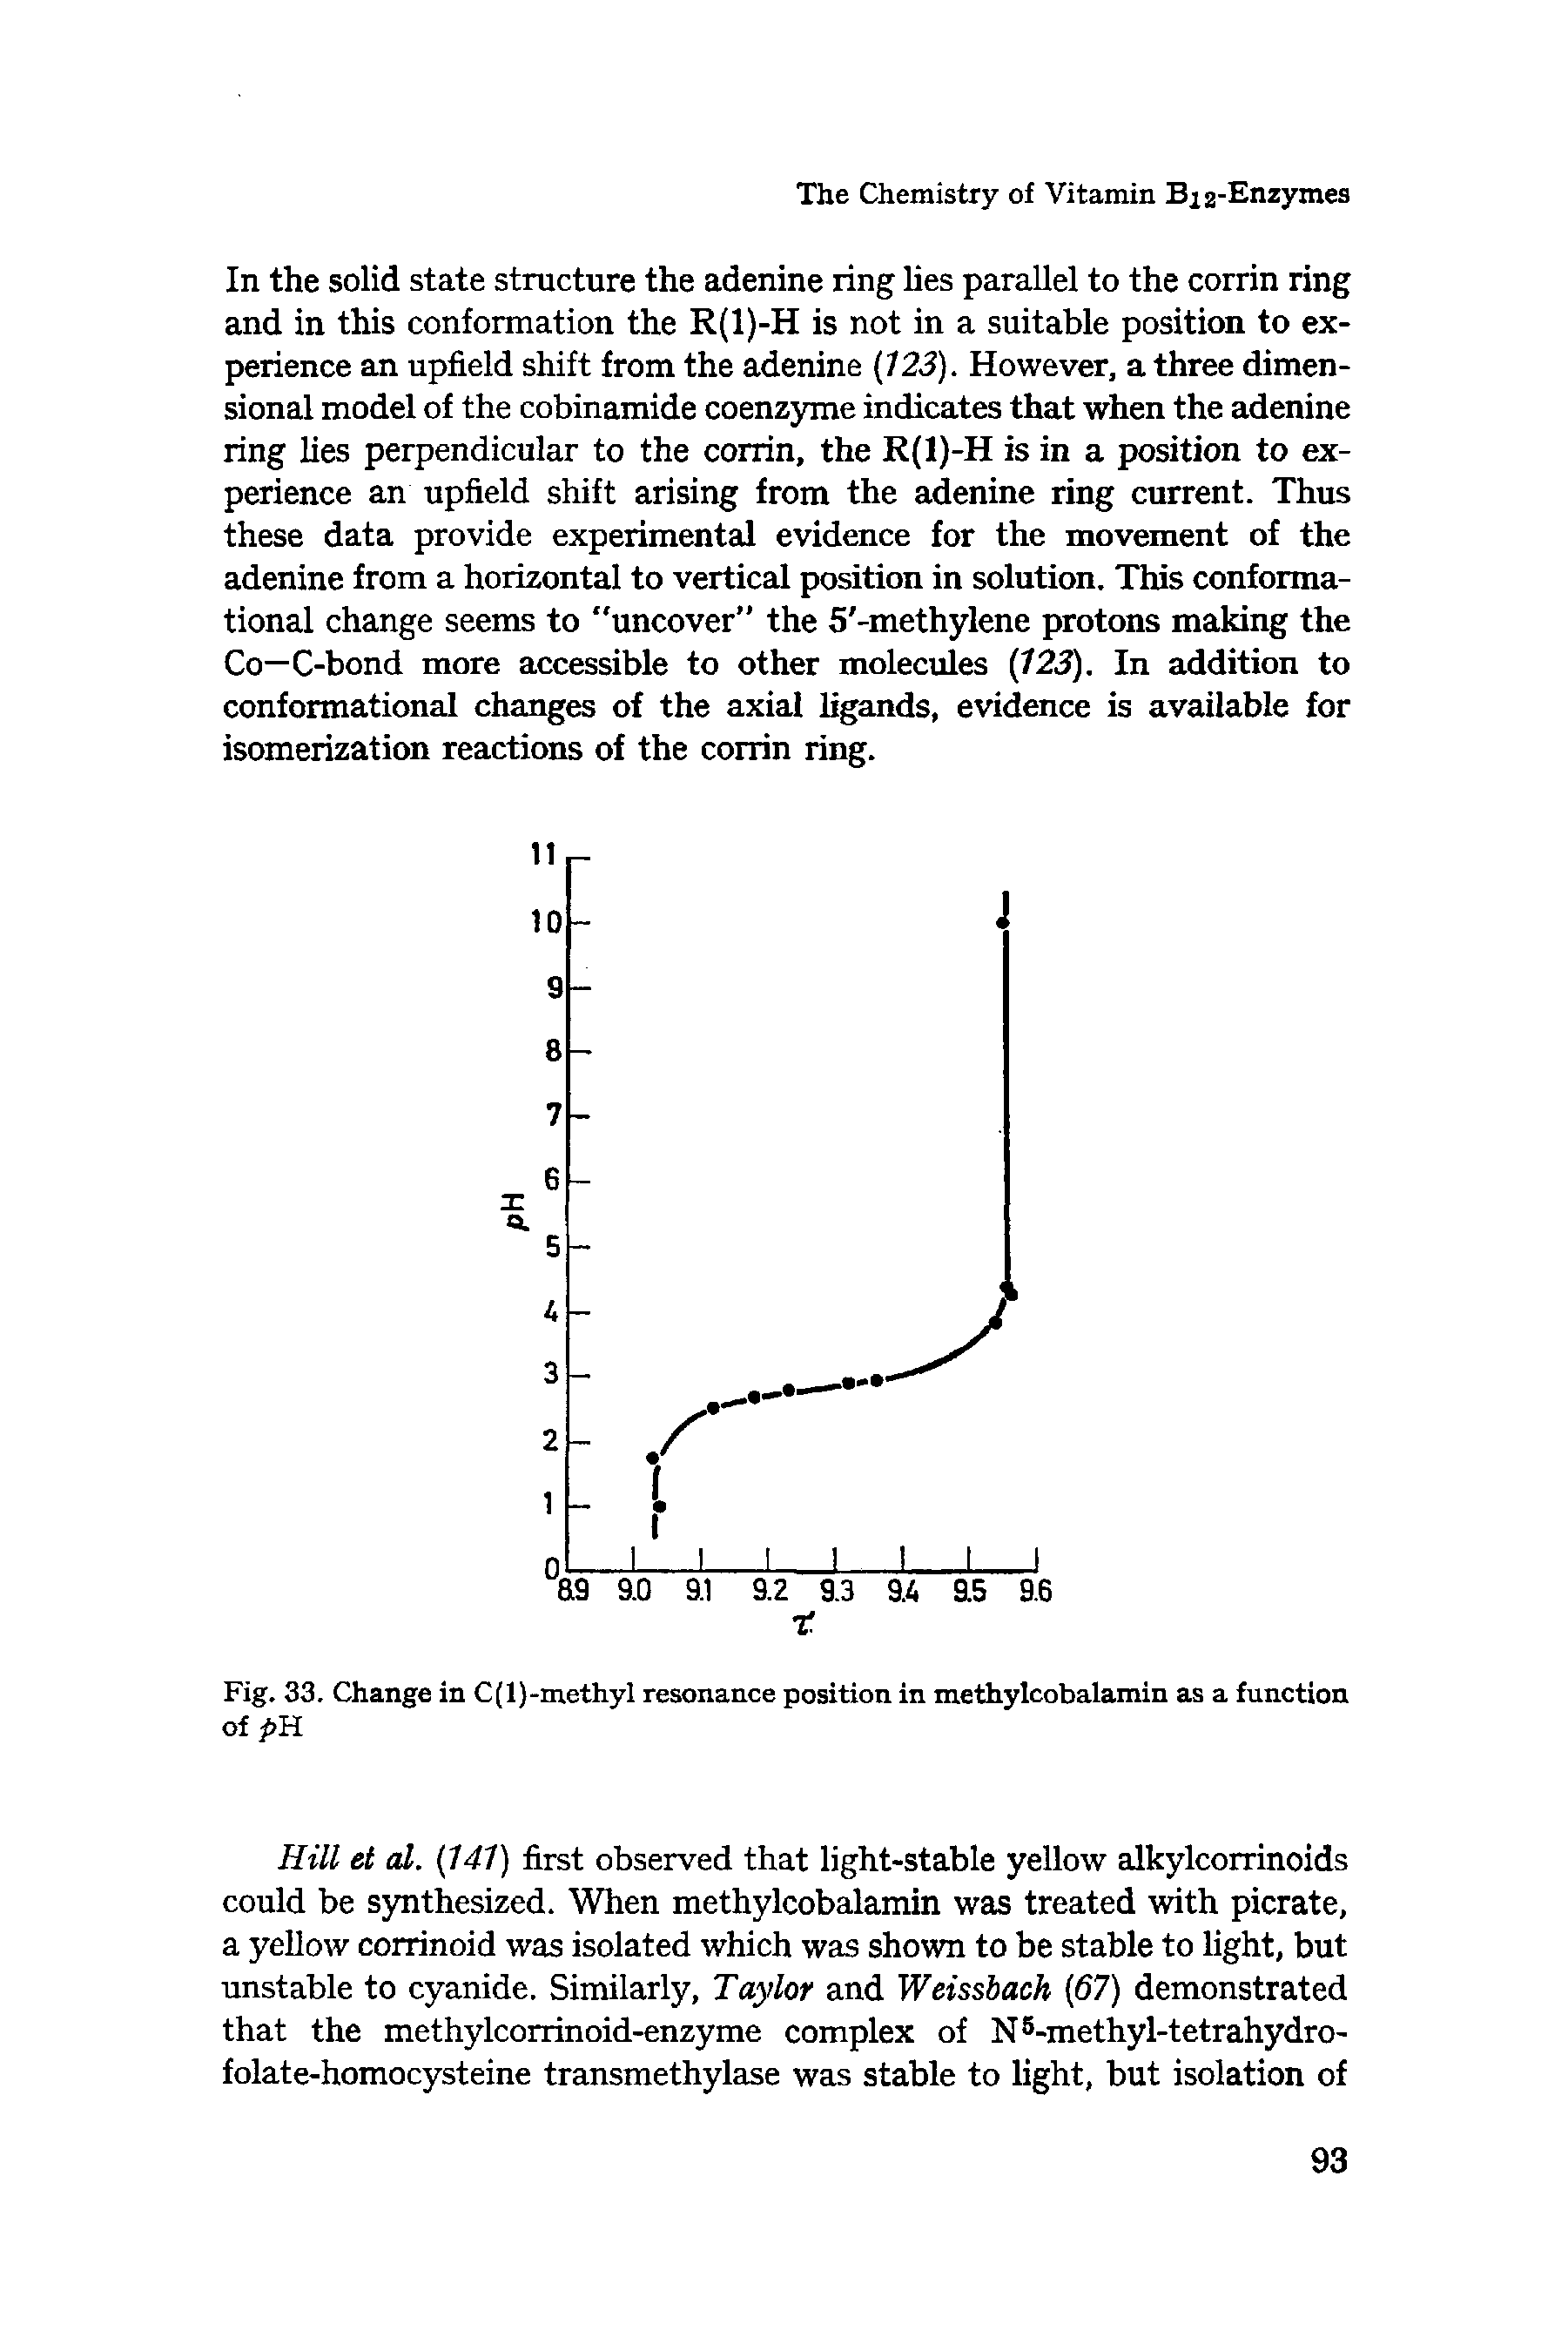 Fig. 33. Change in C(l)-methyl resonance position in methylcobalamin as a function...